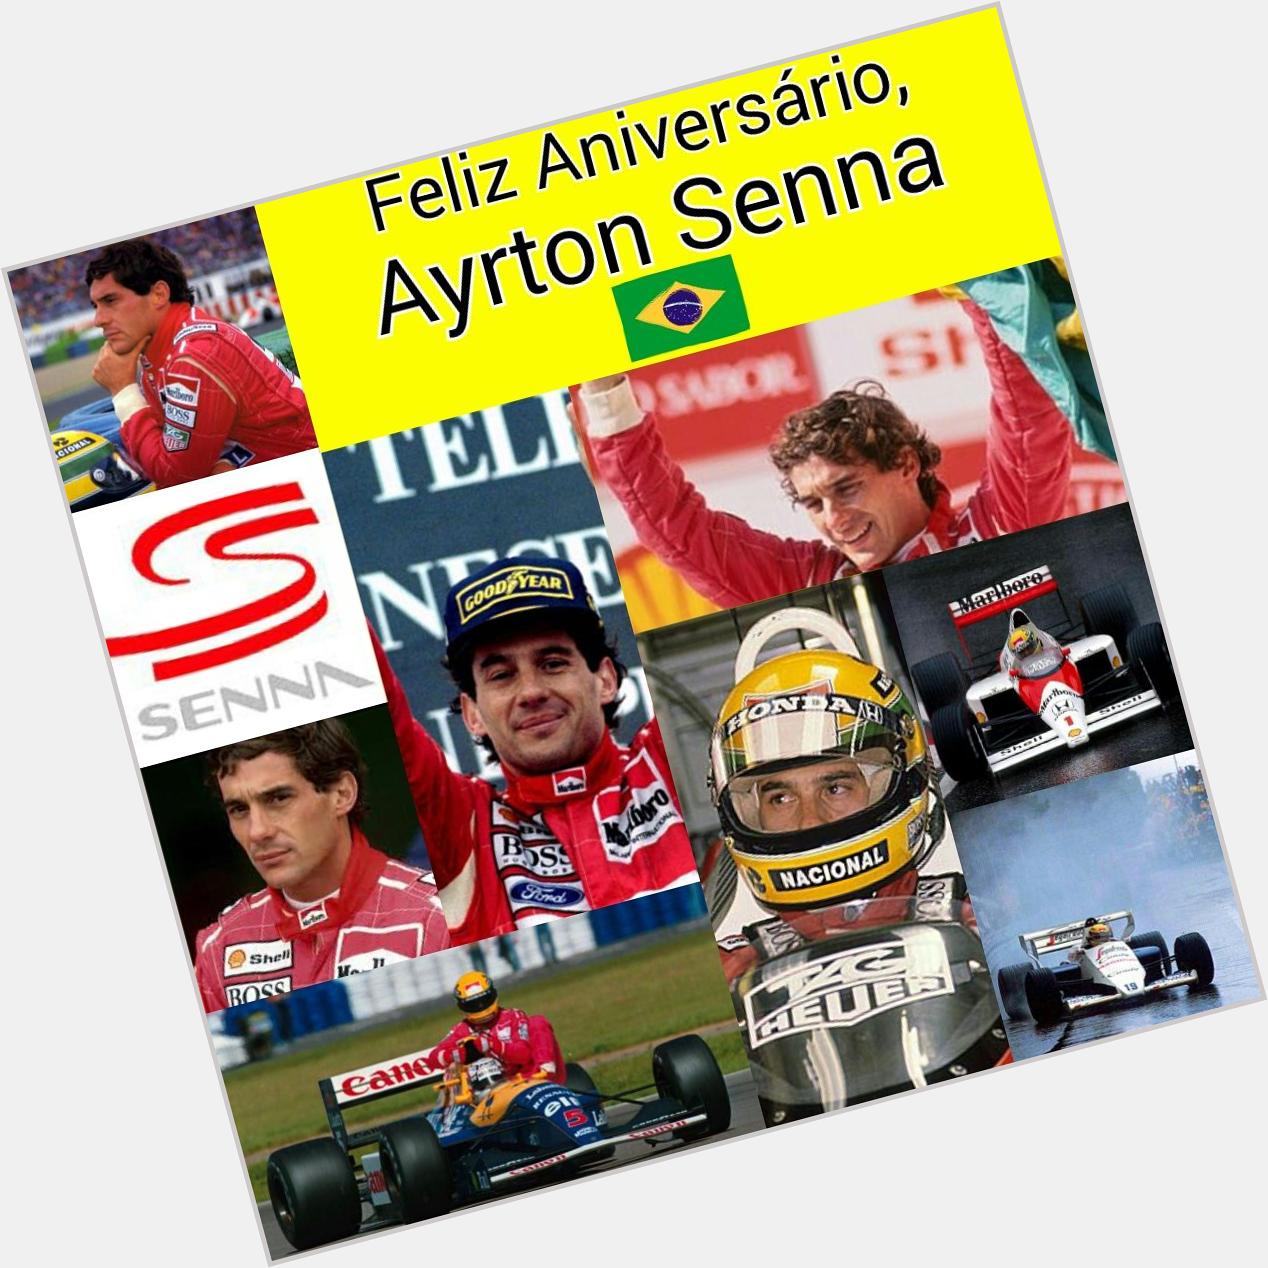 Happy Birthday, My idol & the best racing driver in the world, Ayrton Senna  